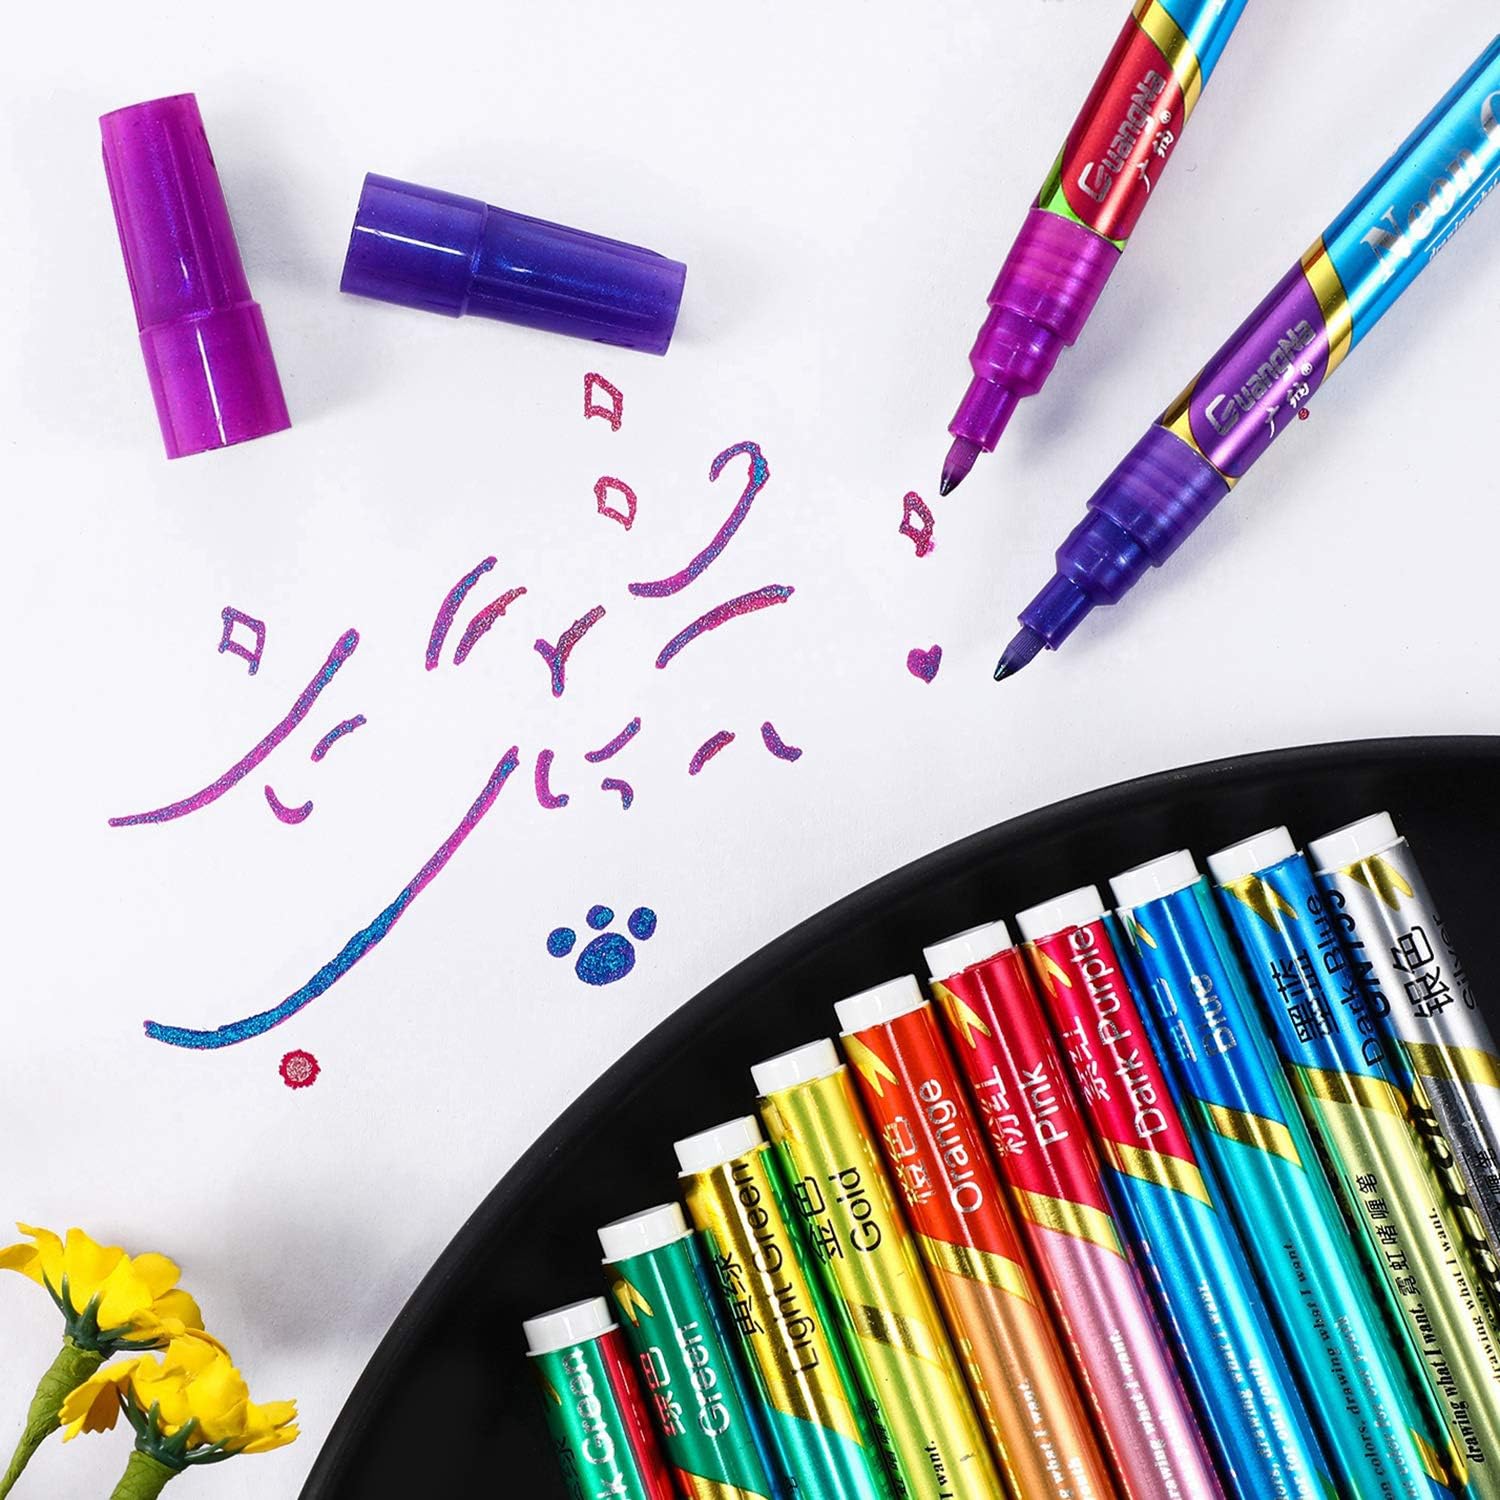 Guangna Neon Gel Pen Glitter Double Color Metallic Marker-12 Colors - TTpen